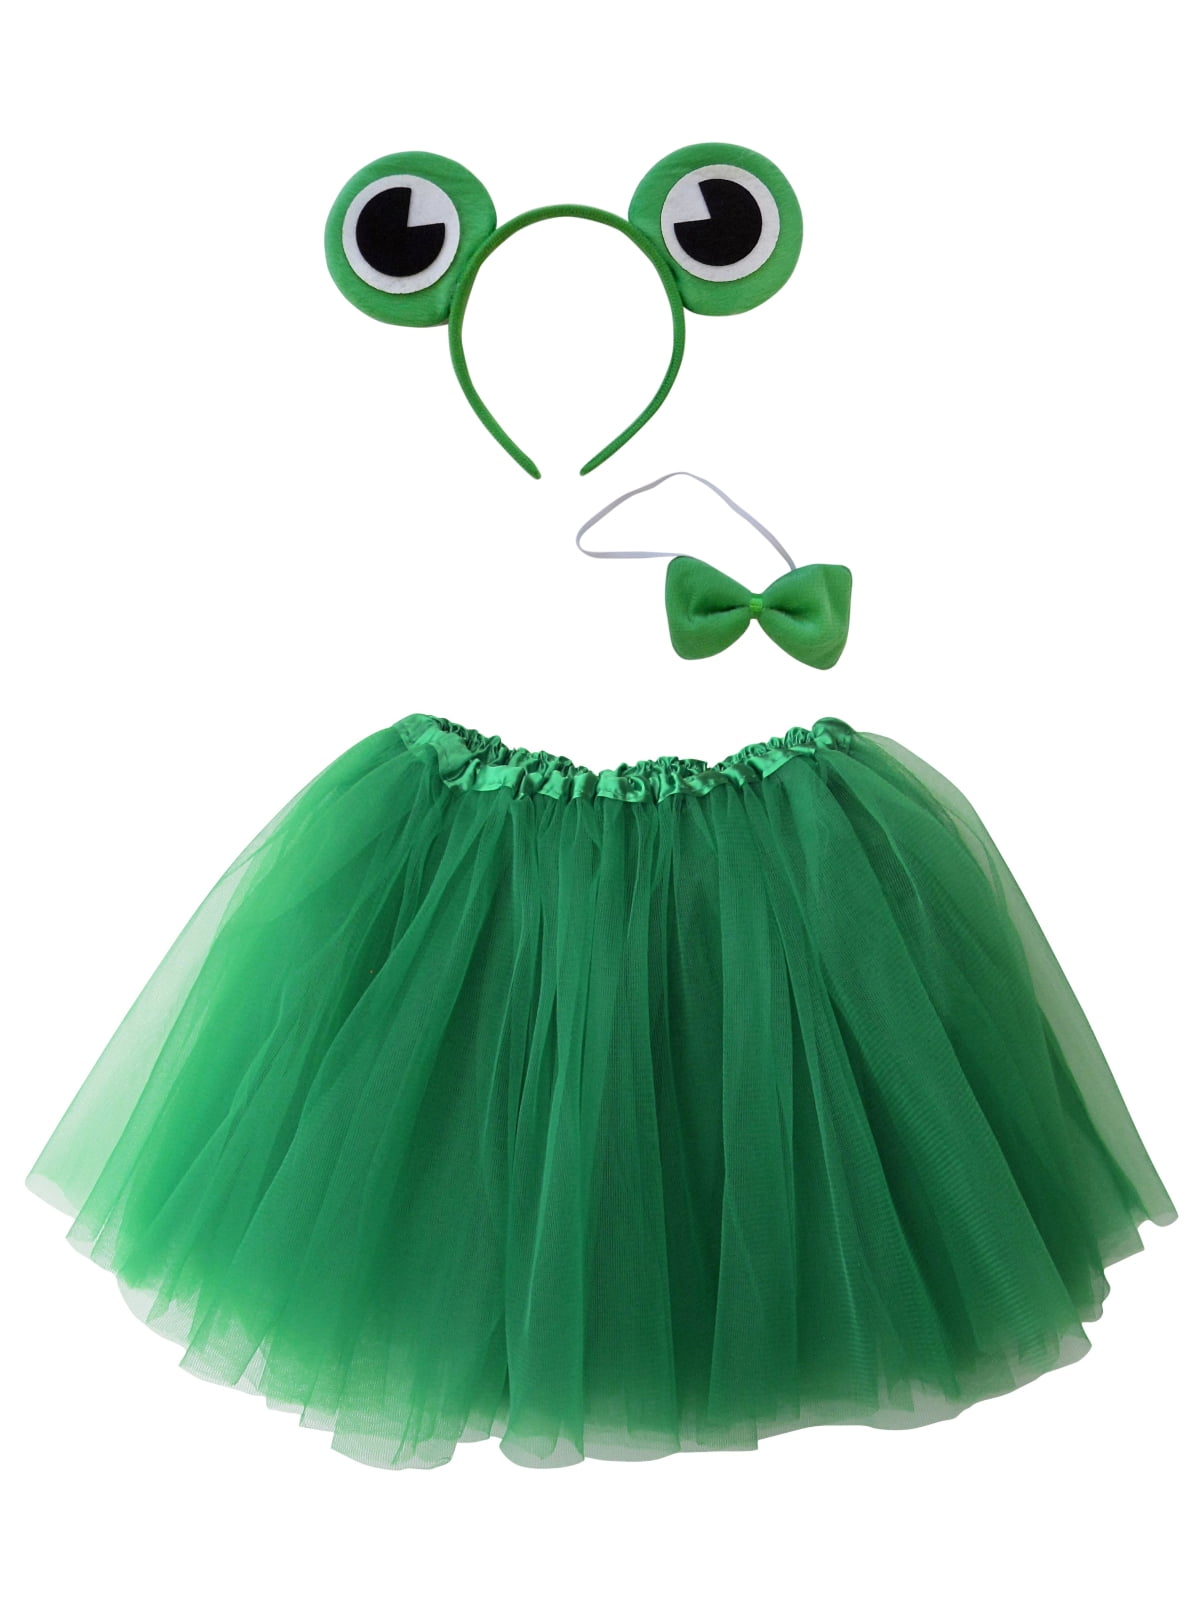 Tail Set Animal Dress Up Green Fancy Dress Costume Frog Eyes Headband Bow Tie 